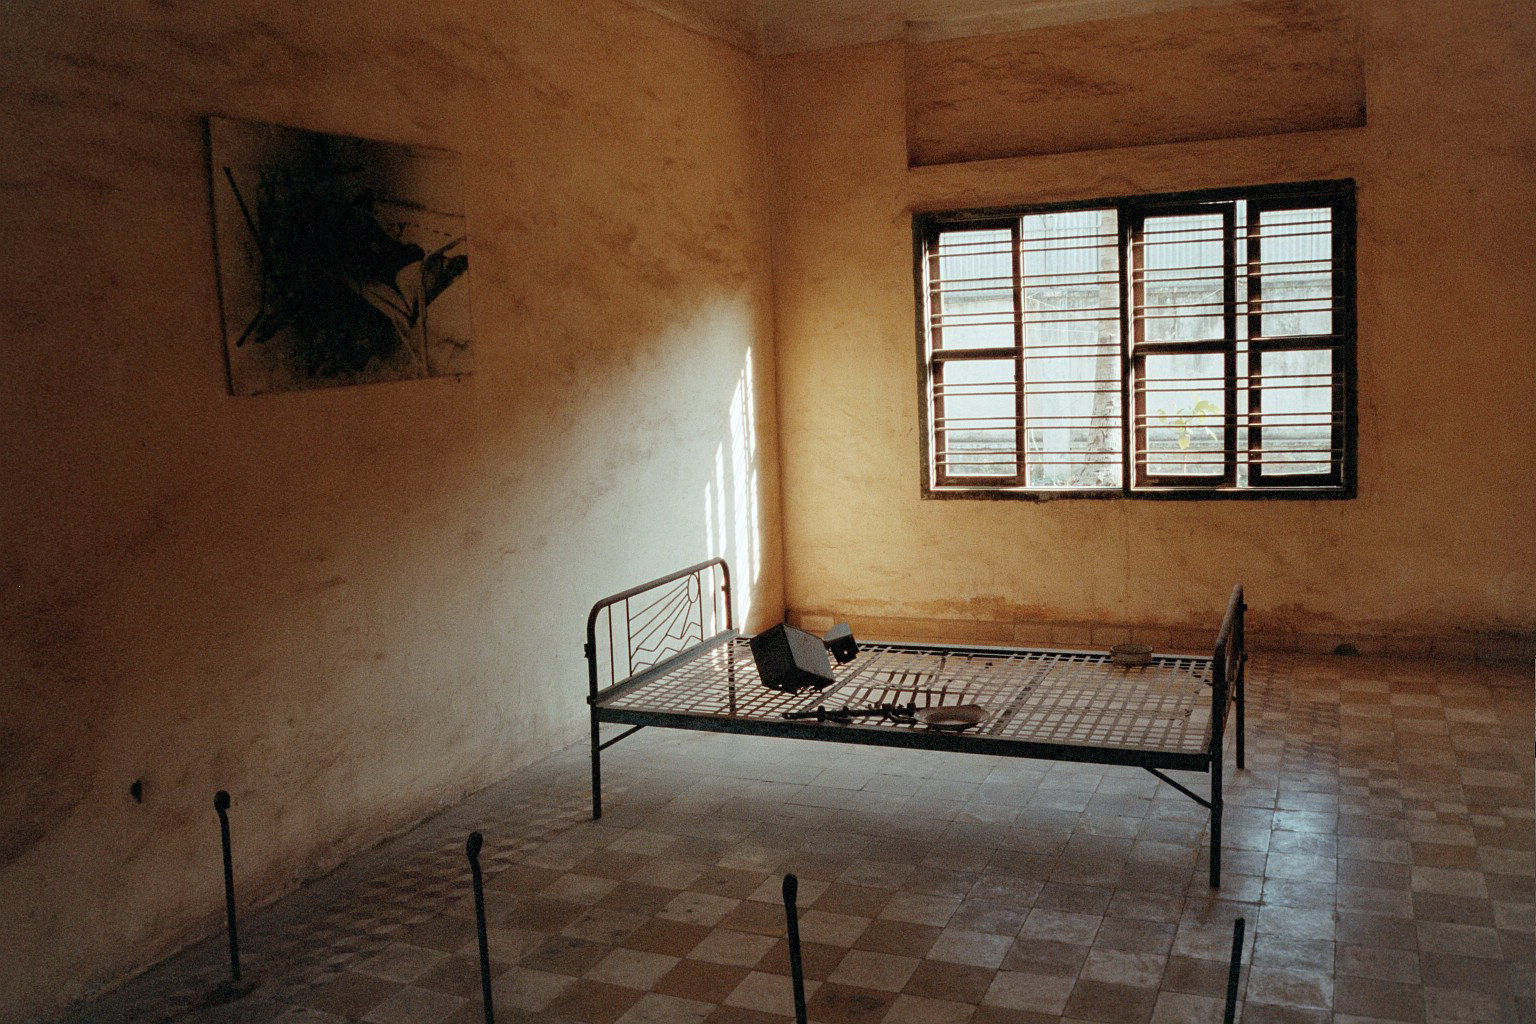 s21 prison cell - Phom Phenm Cambodia Mar 2003